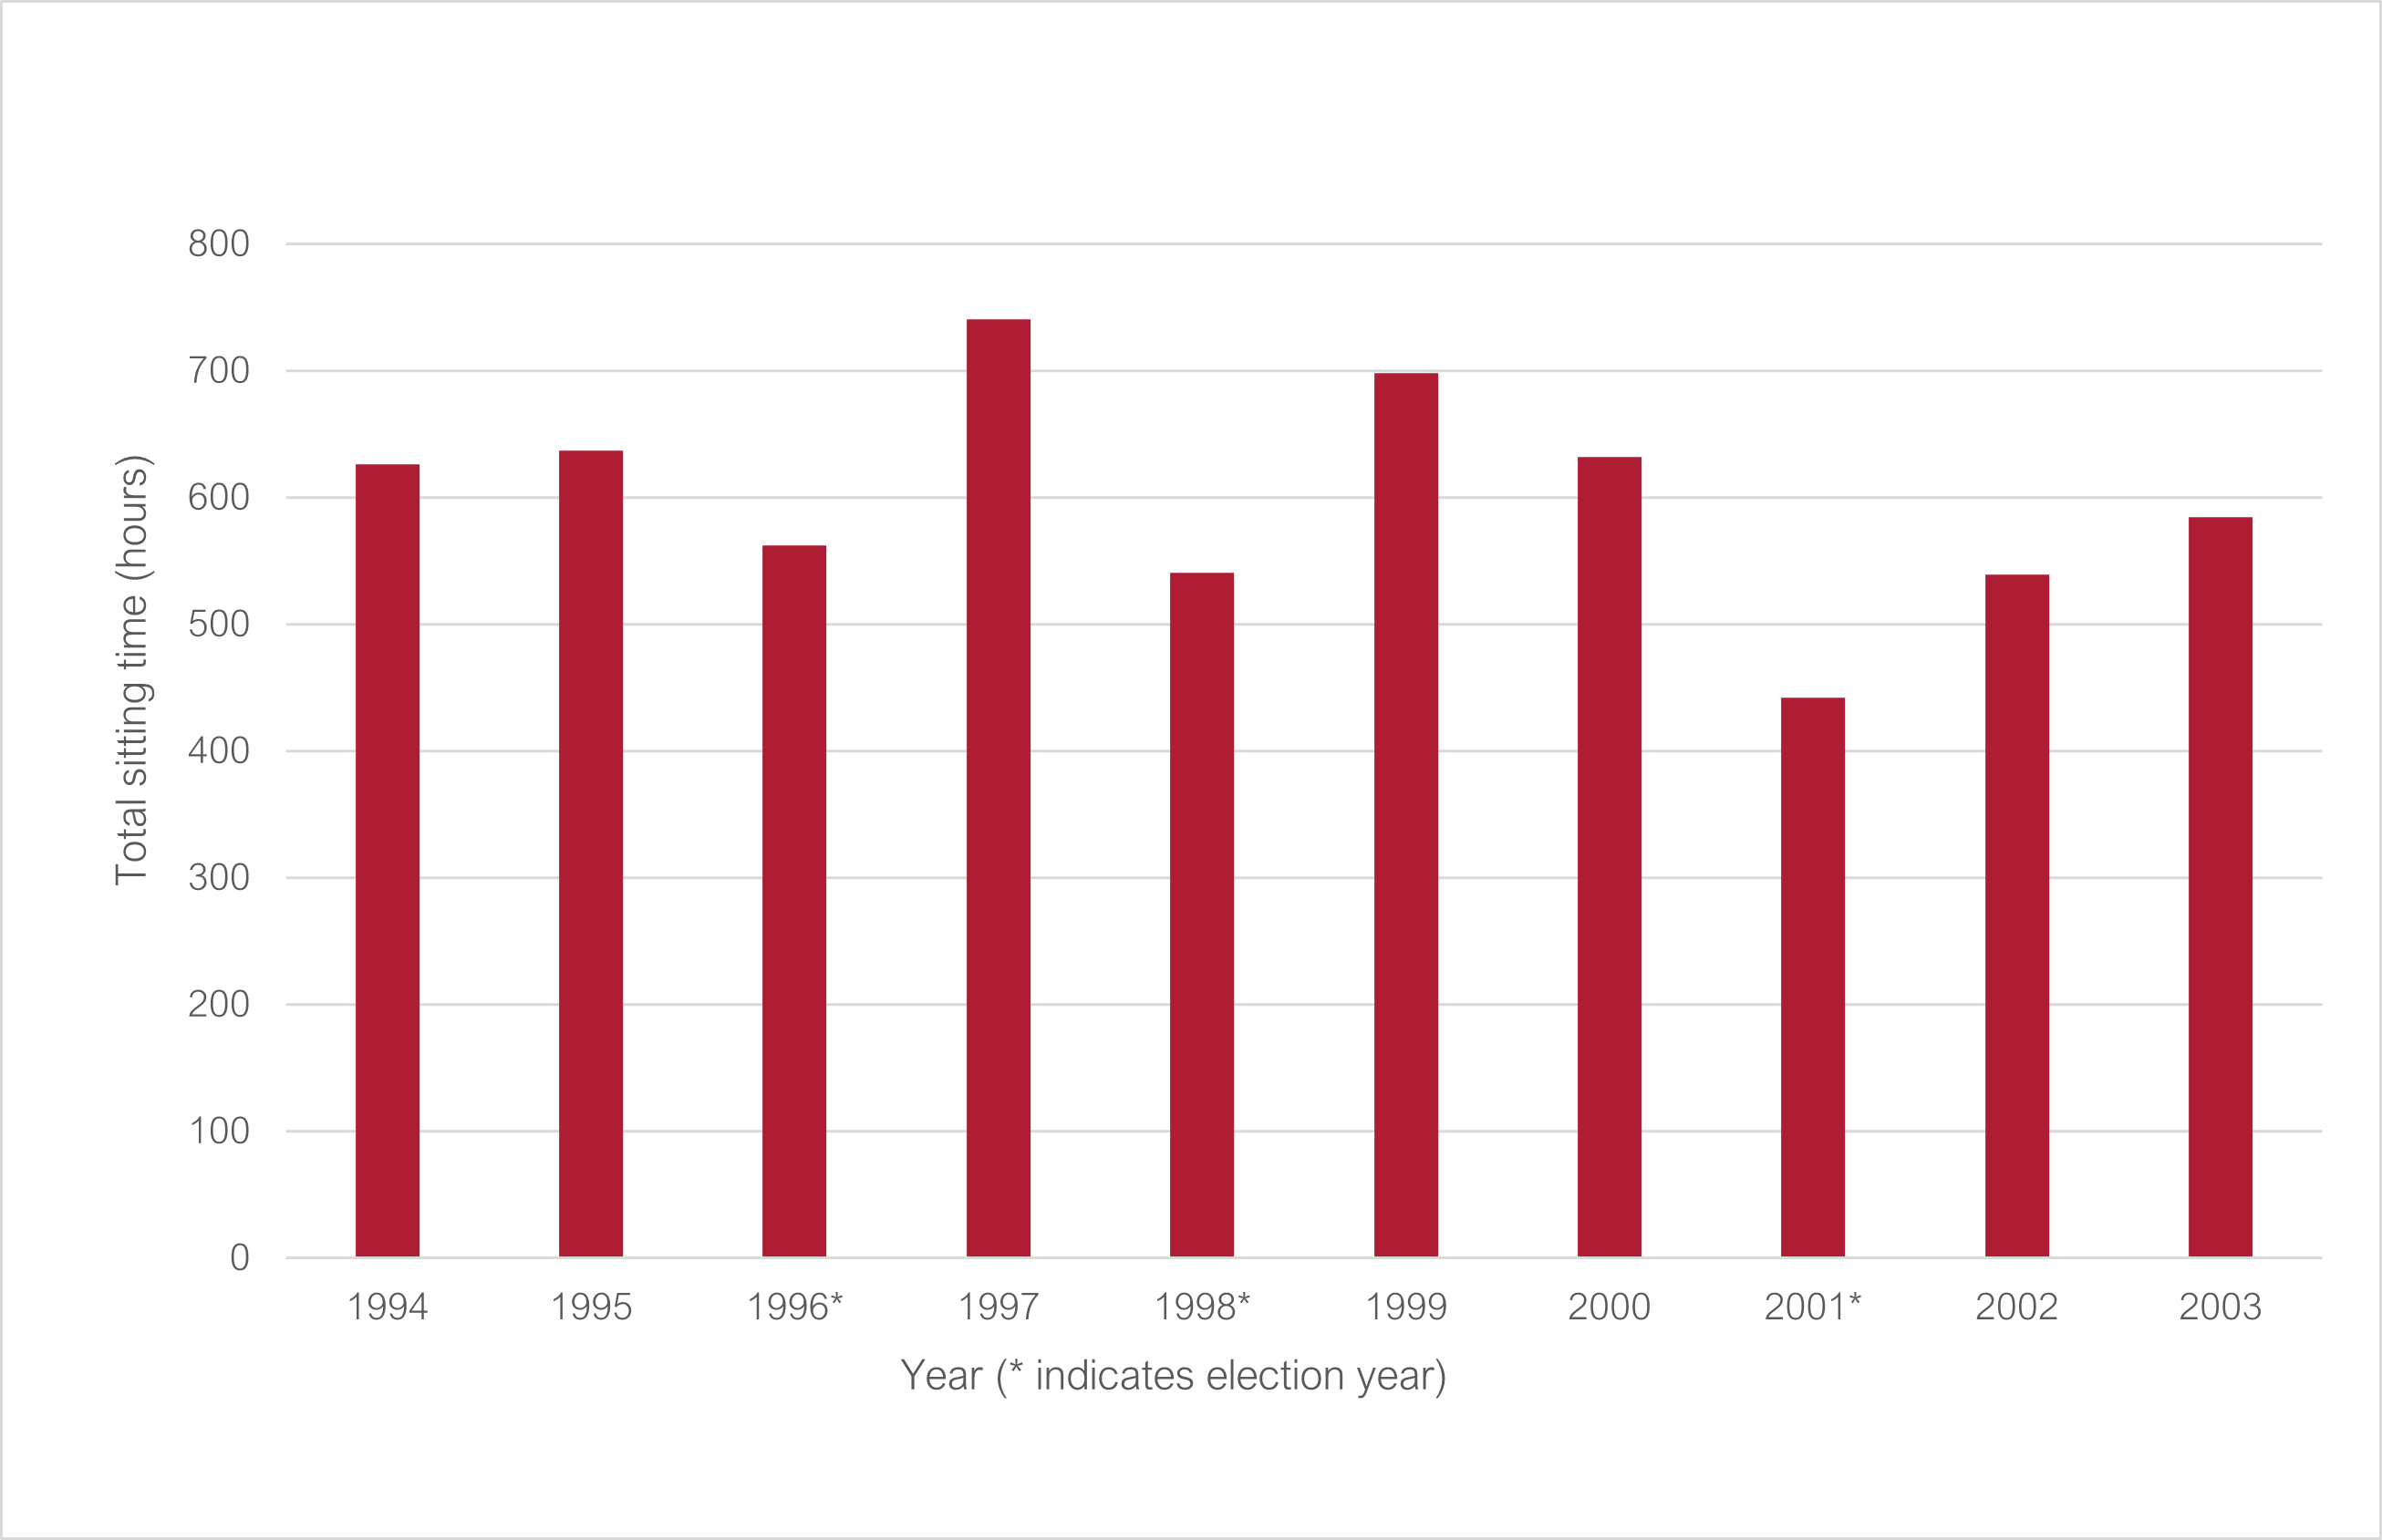 Total Senate sitting time 1994 to 2003 (* indicates election year): 1994 626.4; 1995 637.26; 1996* 562.06; 1997 740.7; 1998* 540.8; 1999 698.6; 2000 631.8; 2001 442.03; 2002 539.12; 2003 584.93